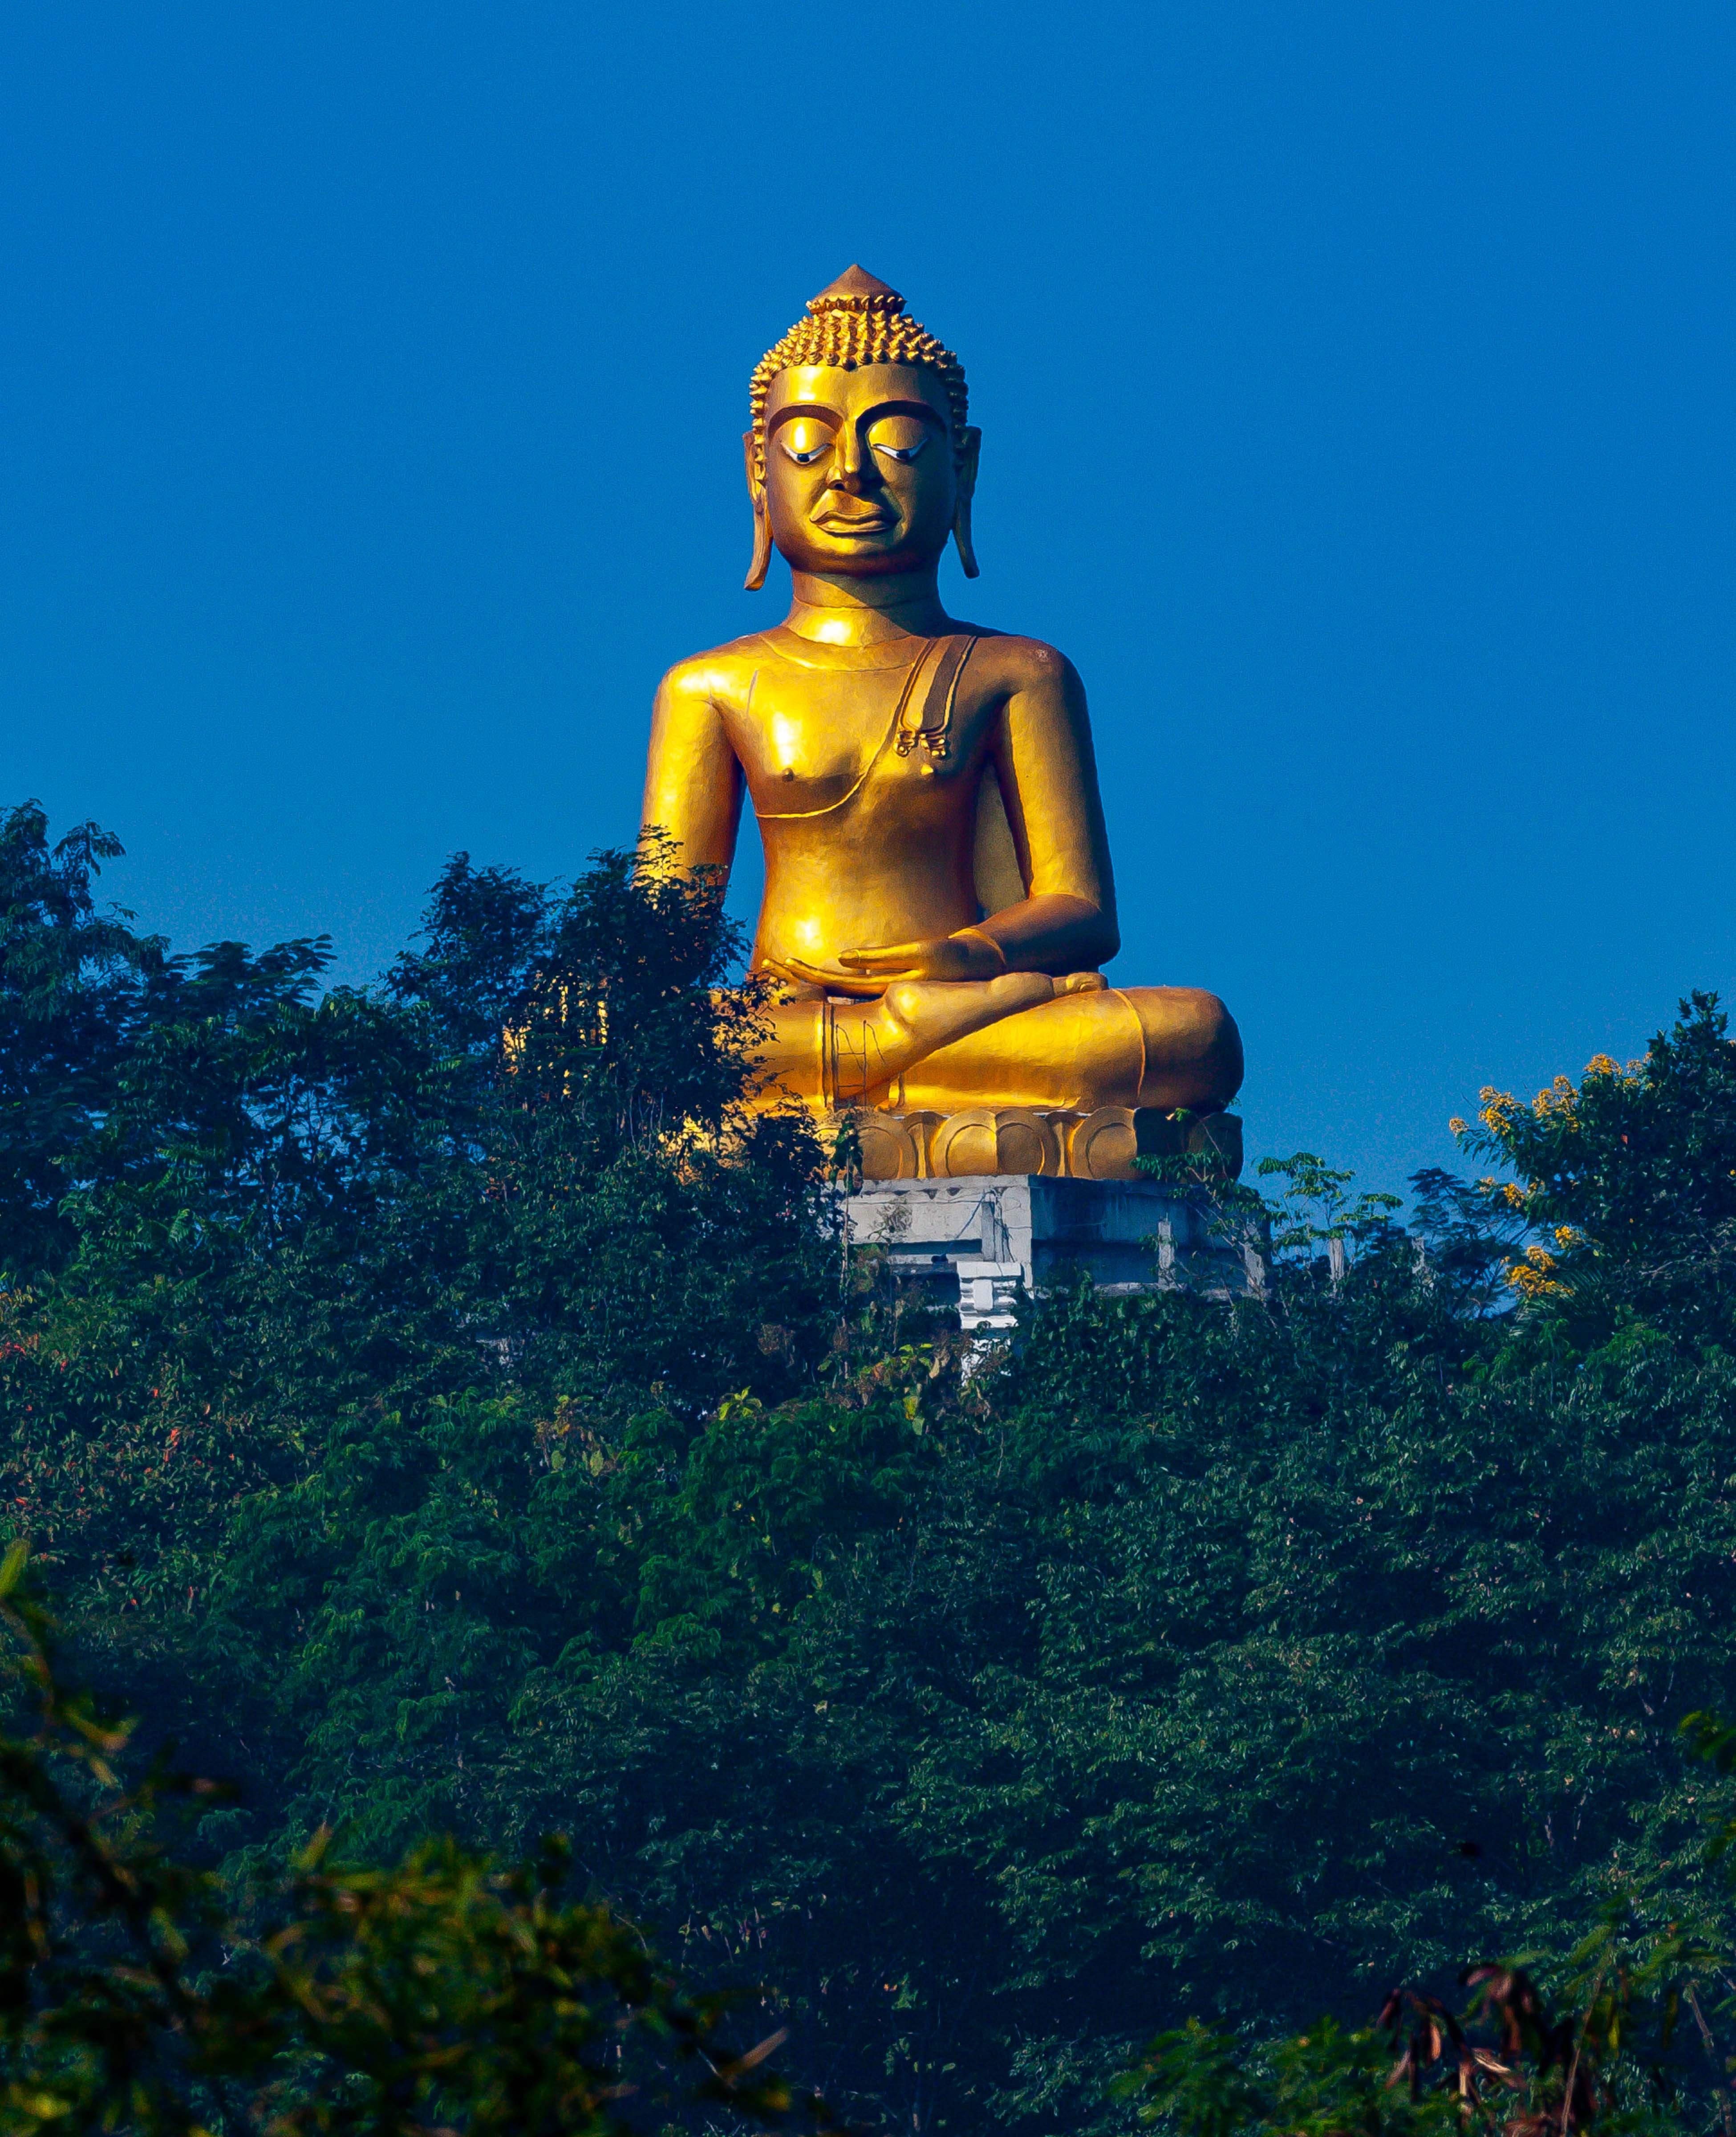 Thailand, Loei Prov, Sitting Buddha, 2008, IMG 6451